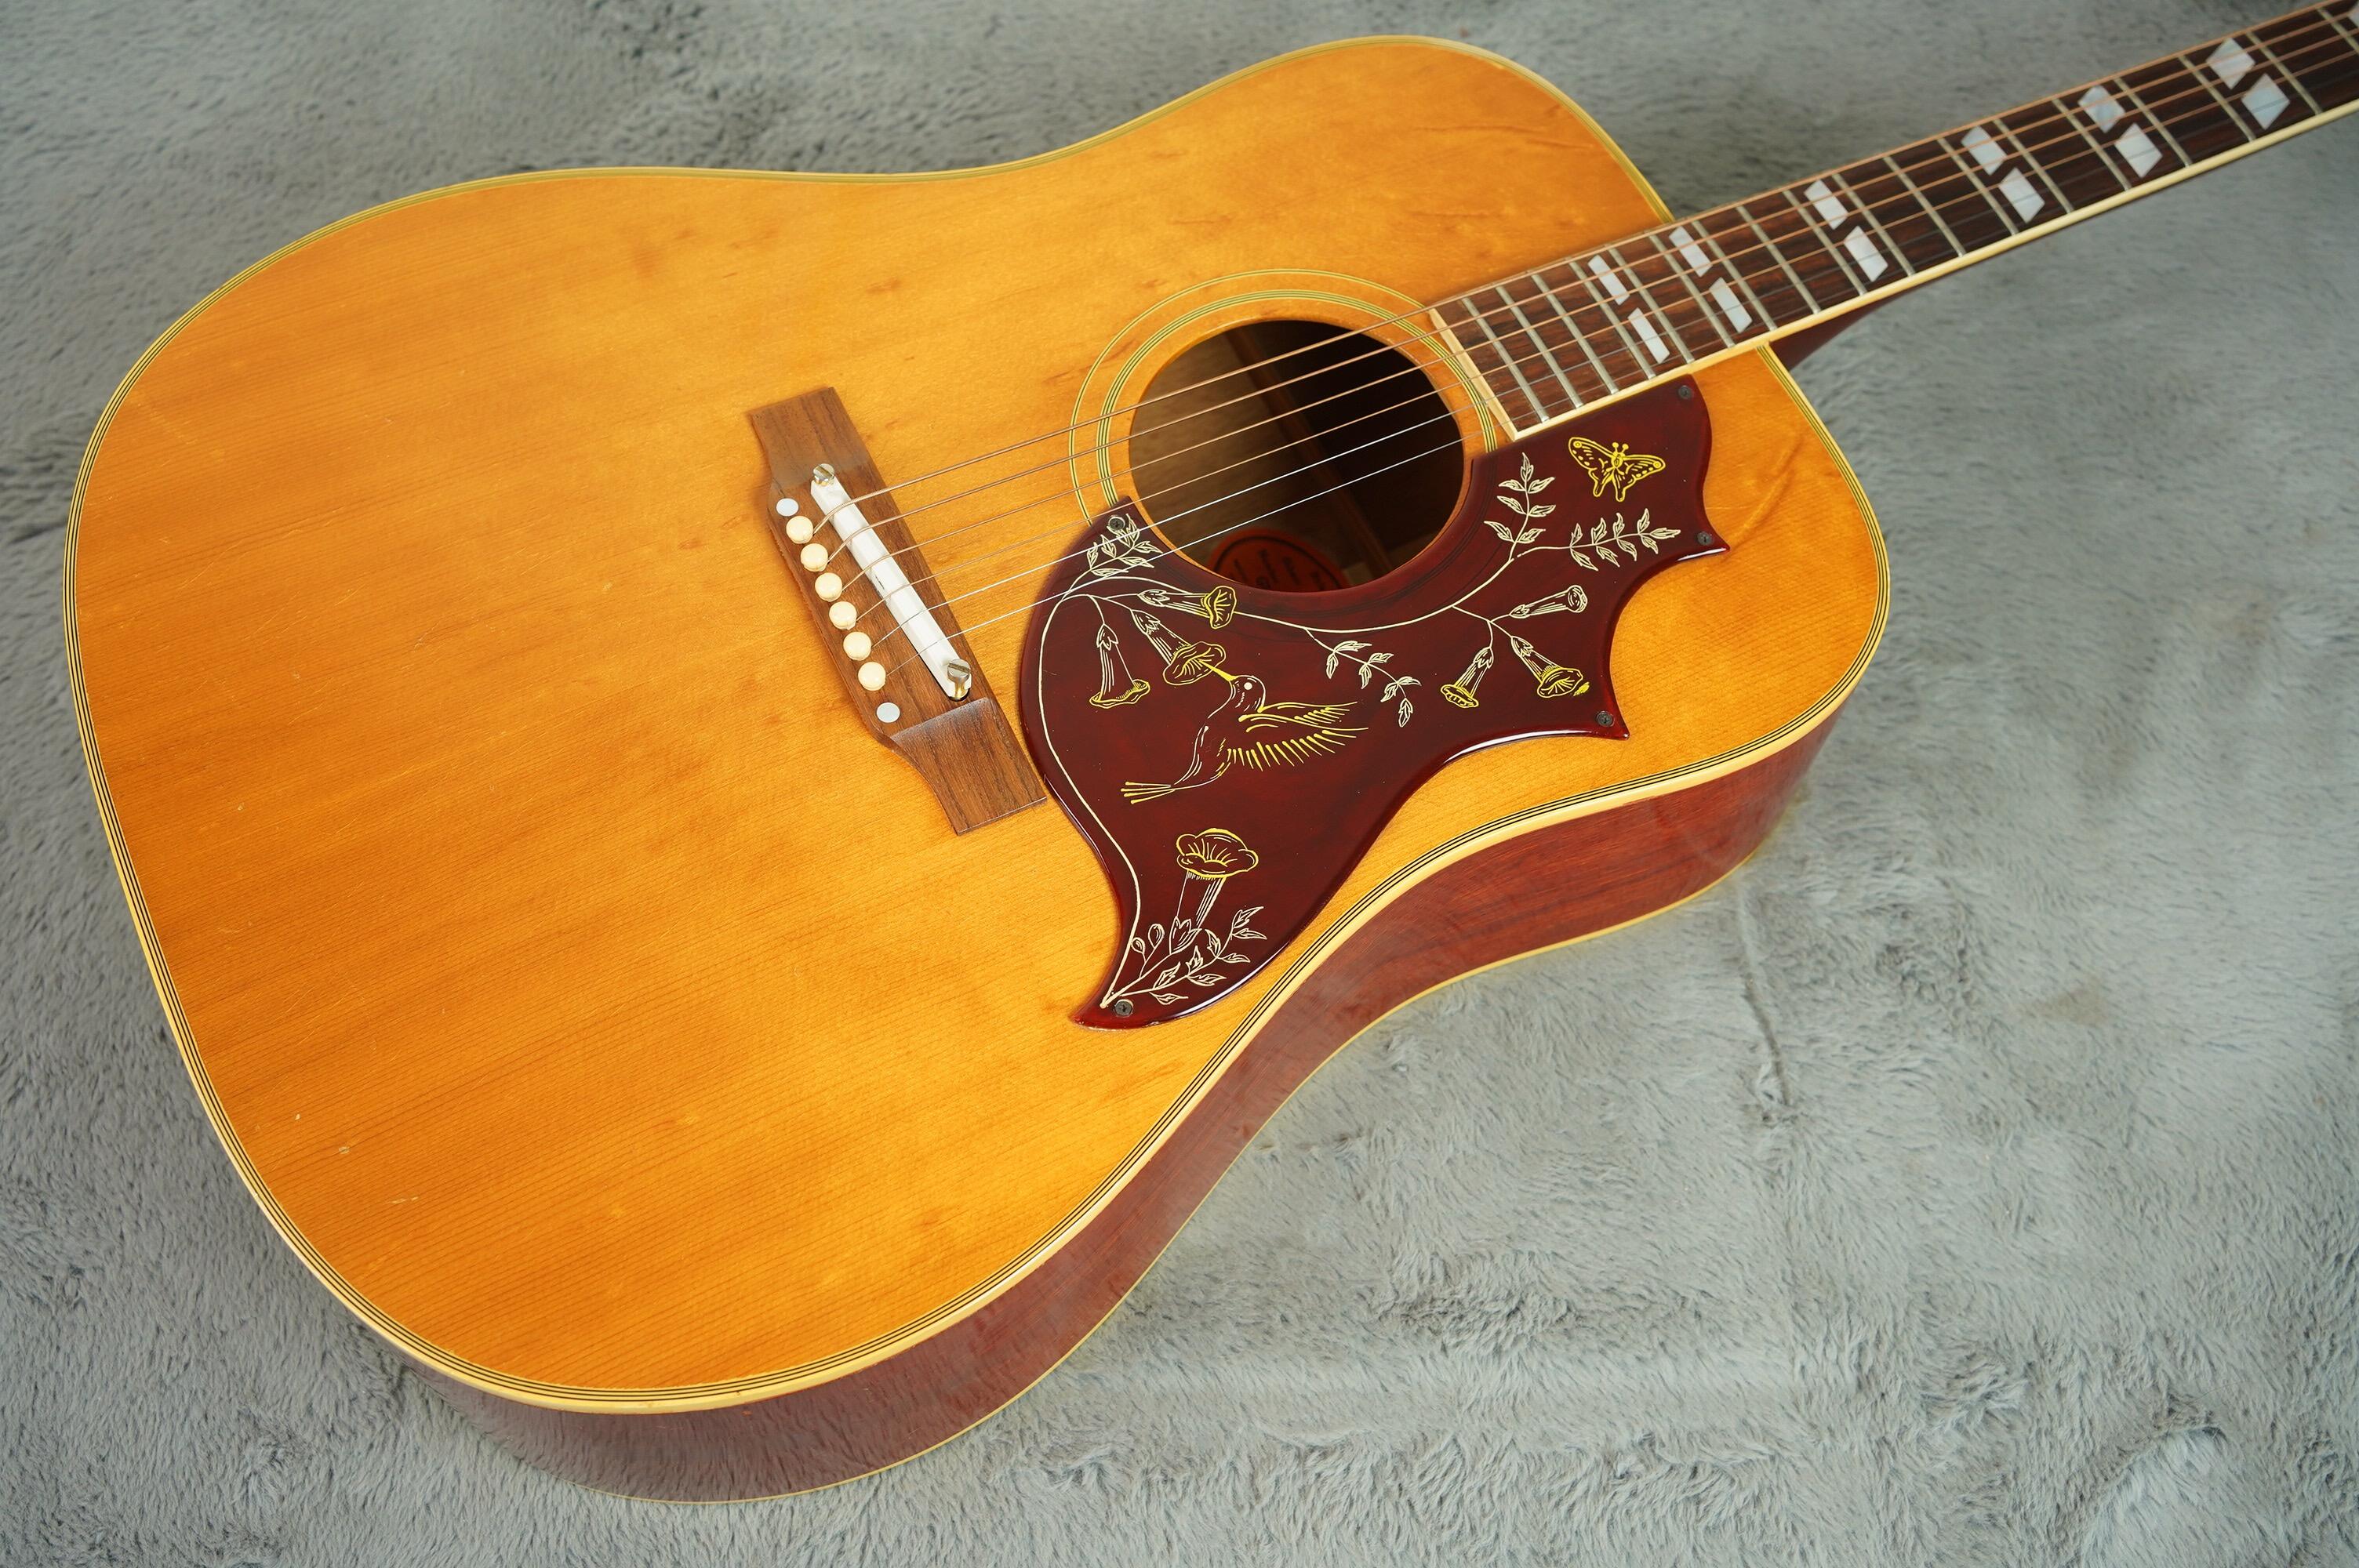 1968 Gibson Hummingbird